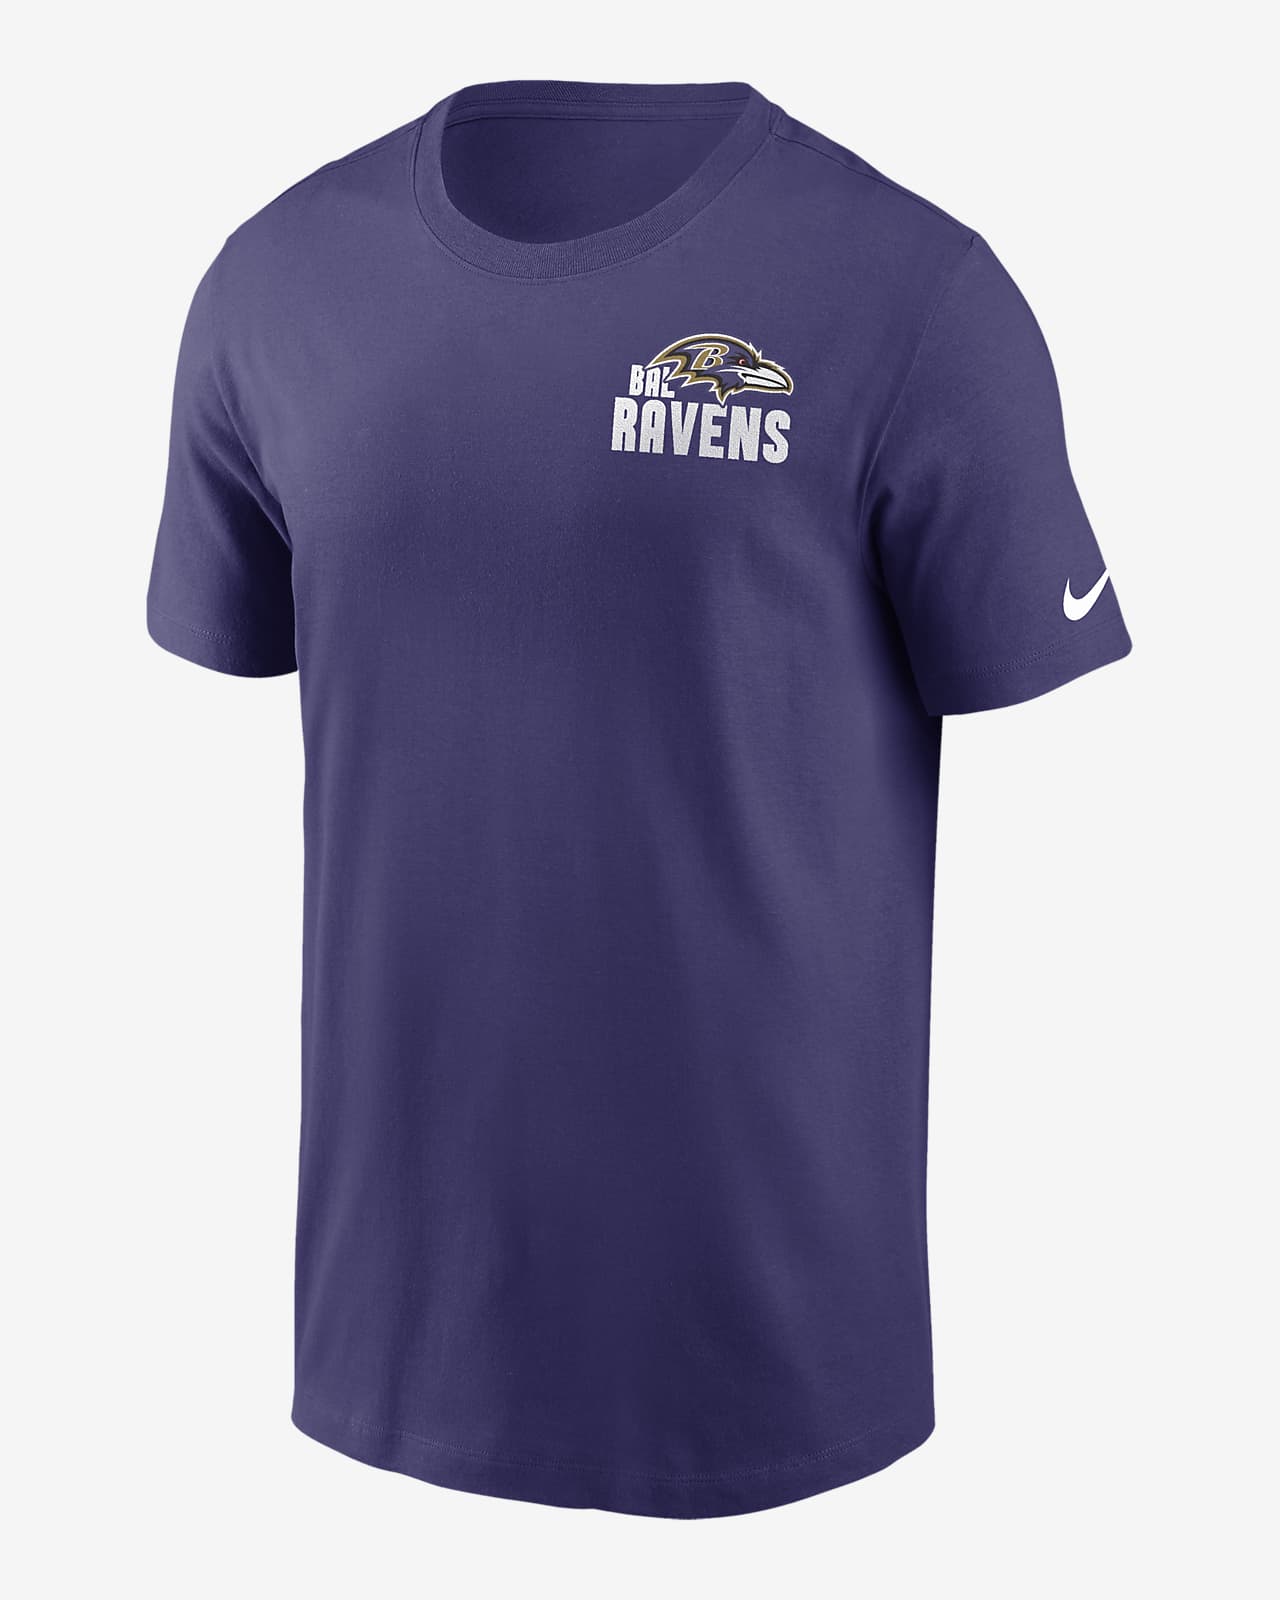 Playera Nike de la NFL para hombre Baltimore Ravens Blitz Team Essential